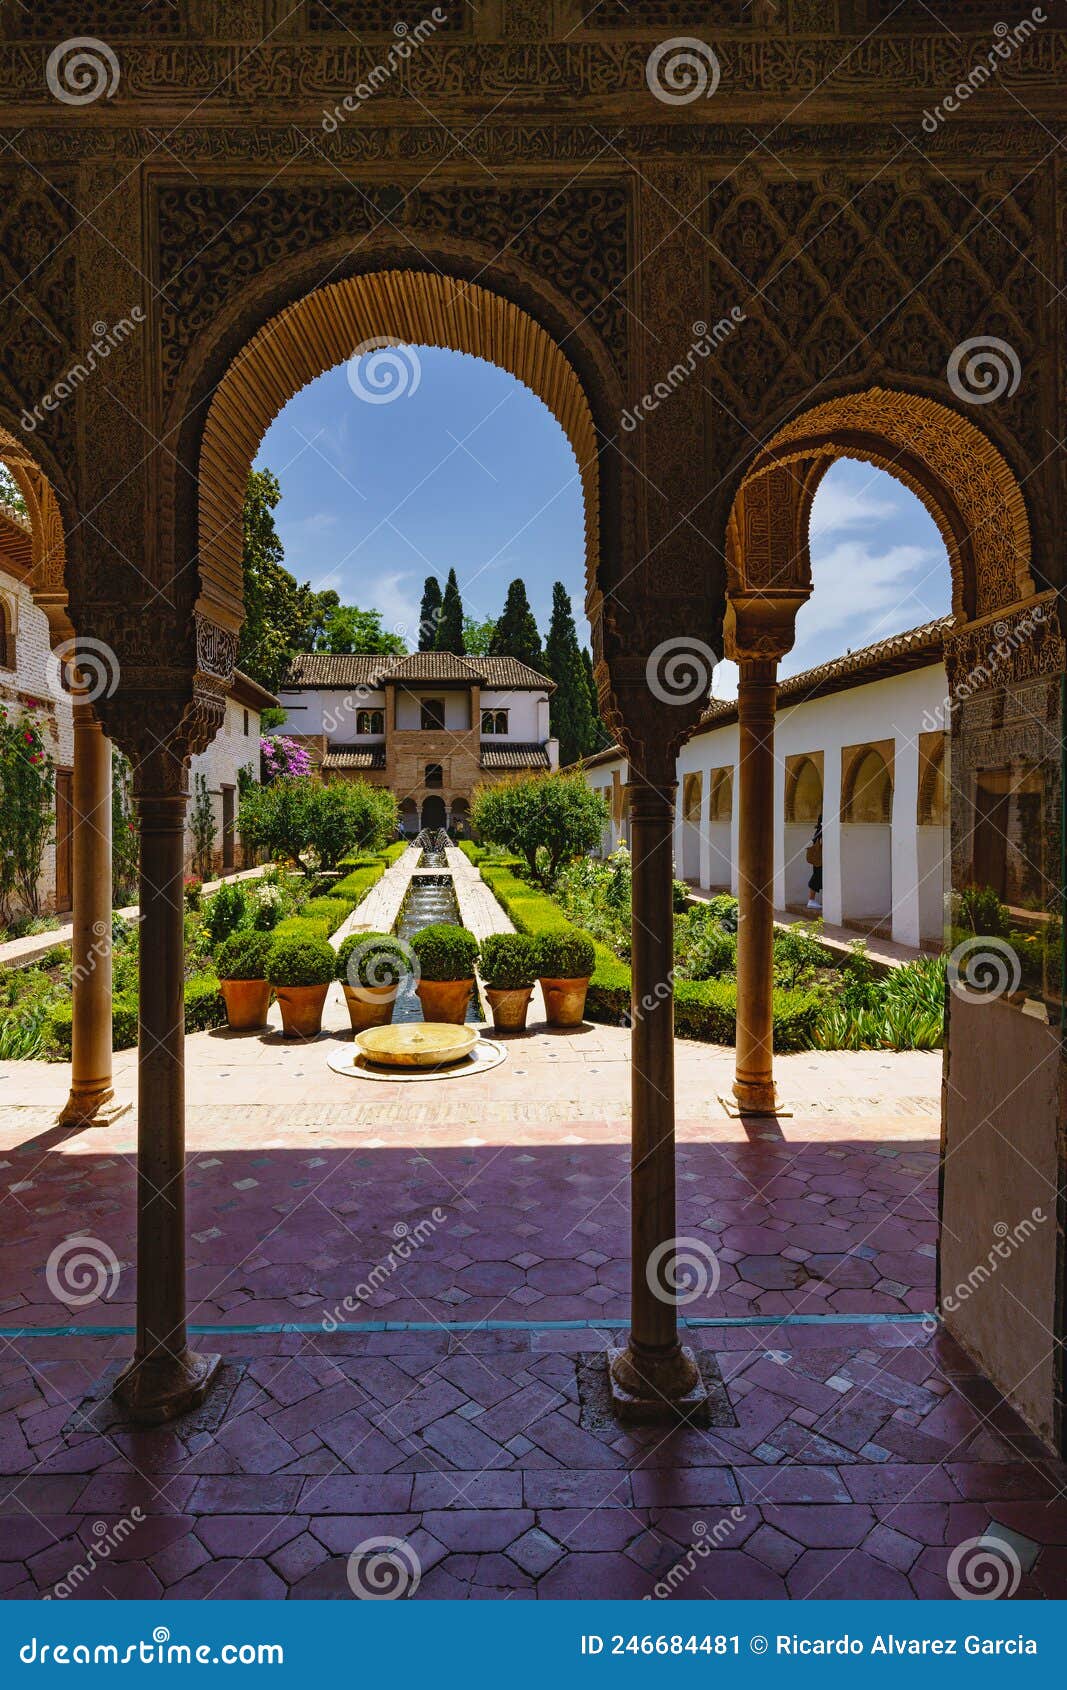 patio de la acequia in the monumental alhambra in granada, in spain